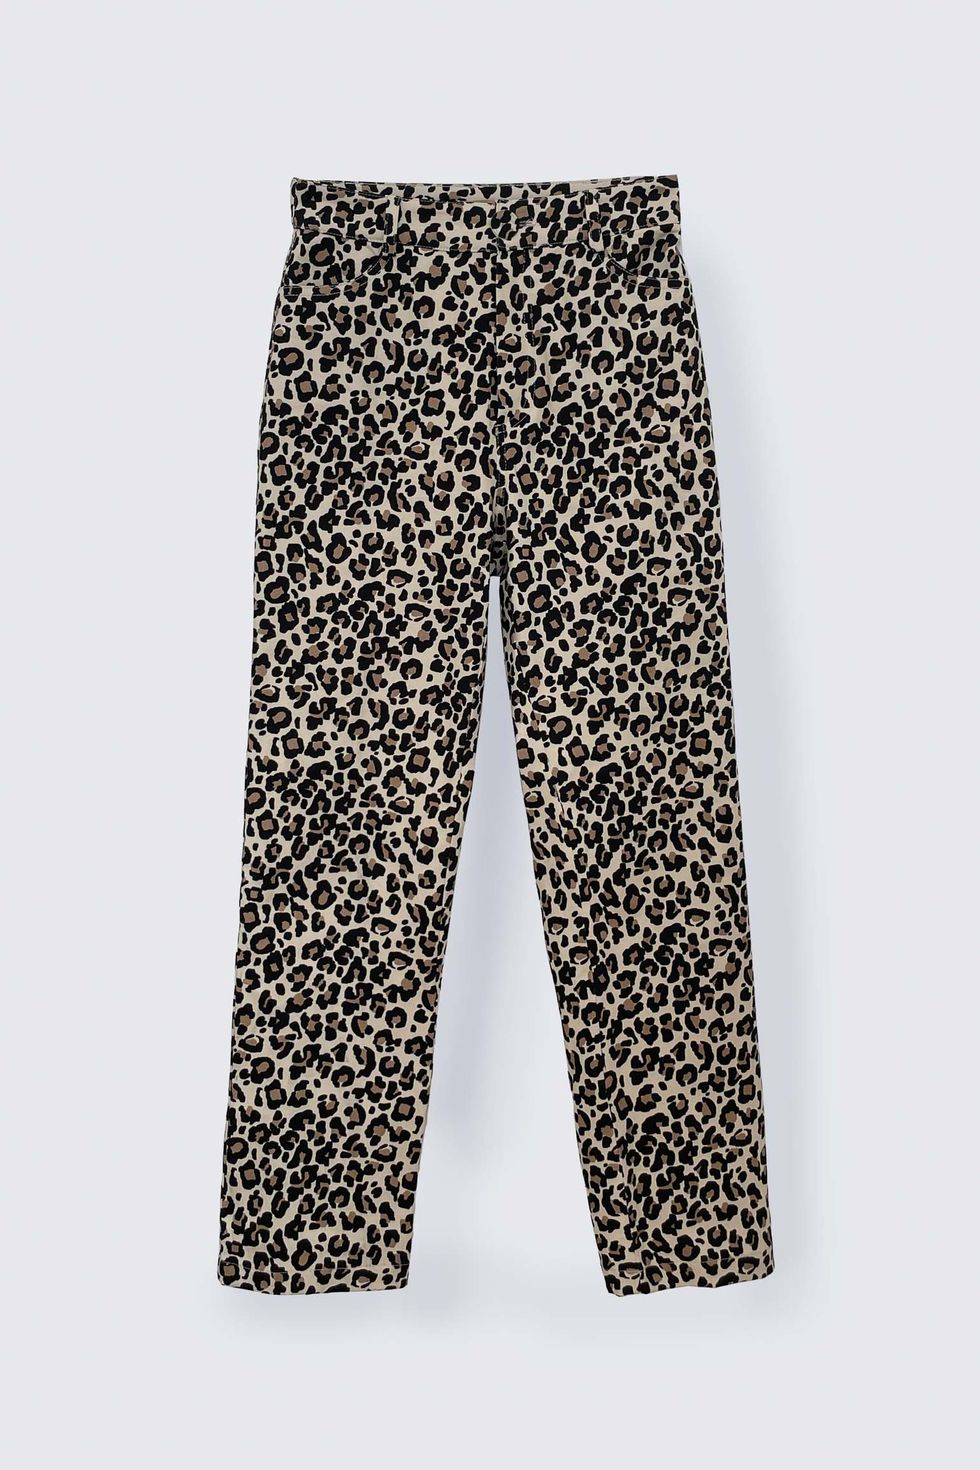 - Pantalones de leopardo